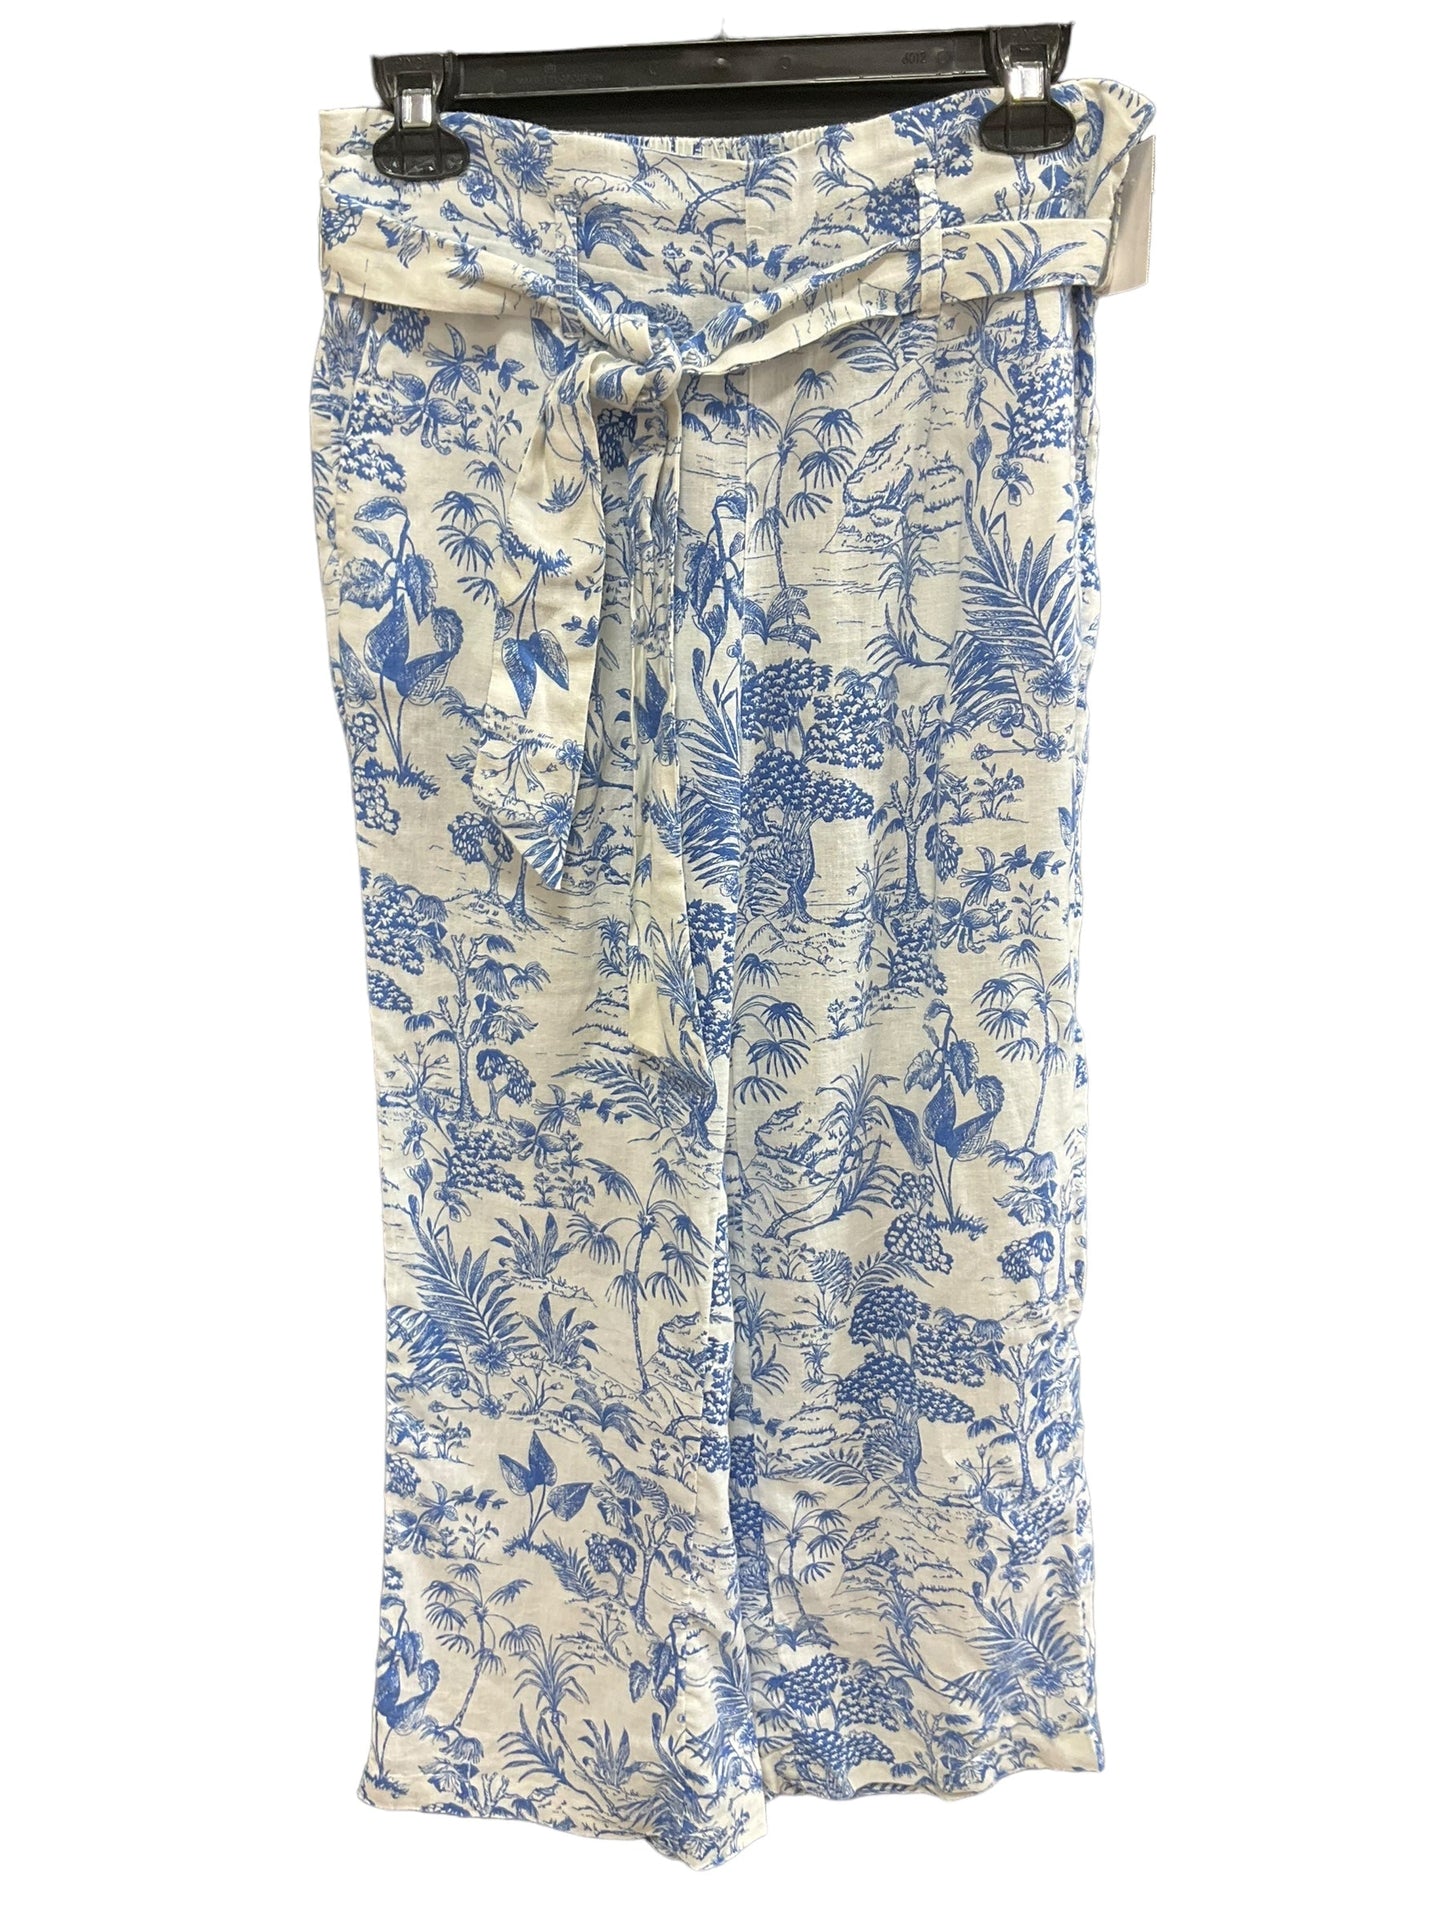 Blue & White Pants Dress Nicole Miller, Size S